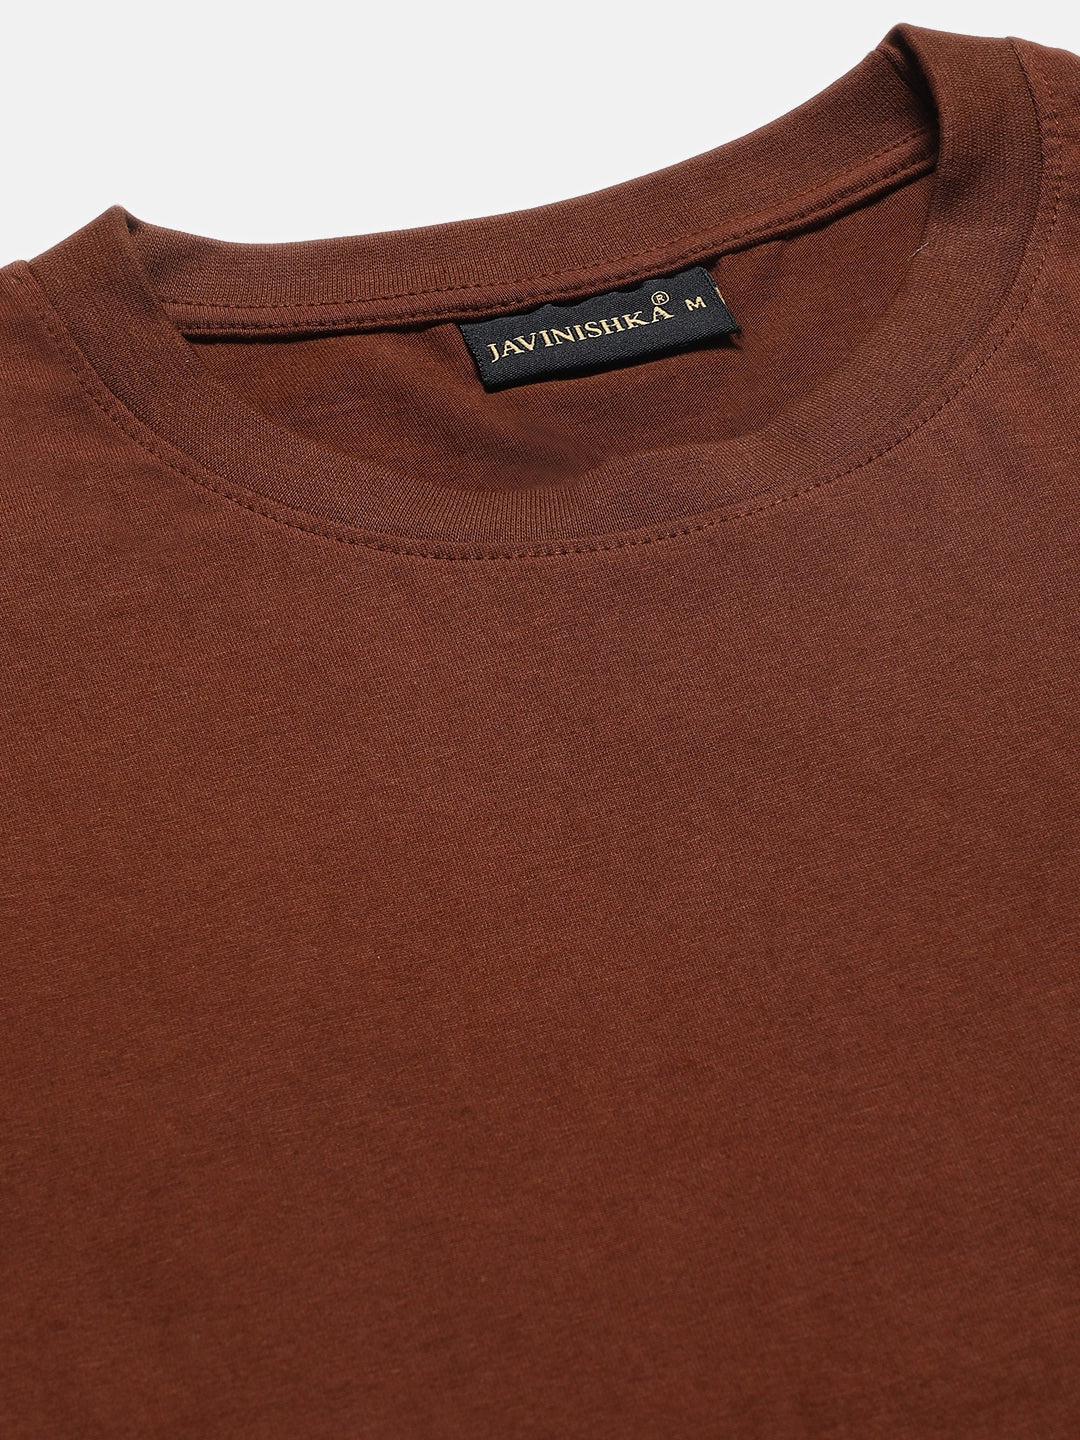 Premium Coffee Brown Solid Round Neck Unisex Comfort Fit T-Shirt